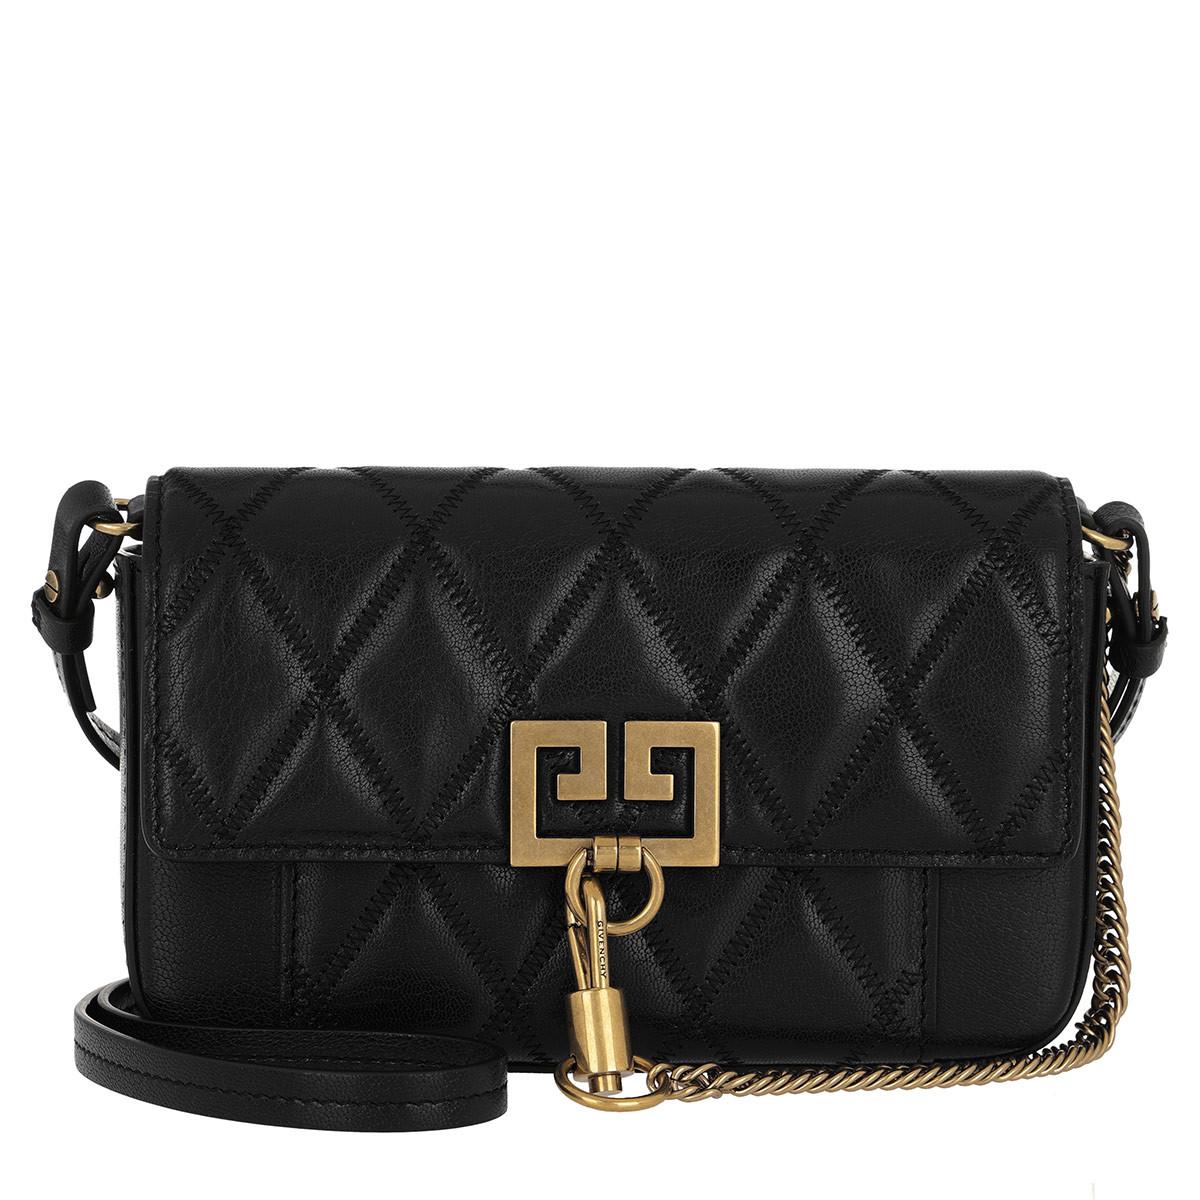 Givenchy Black Mini Pocket Bag at FORZIERI